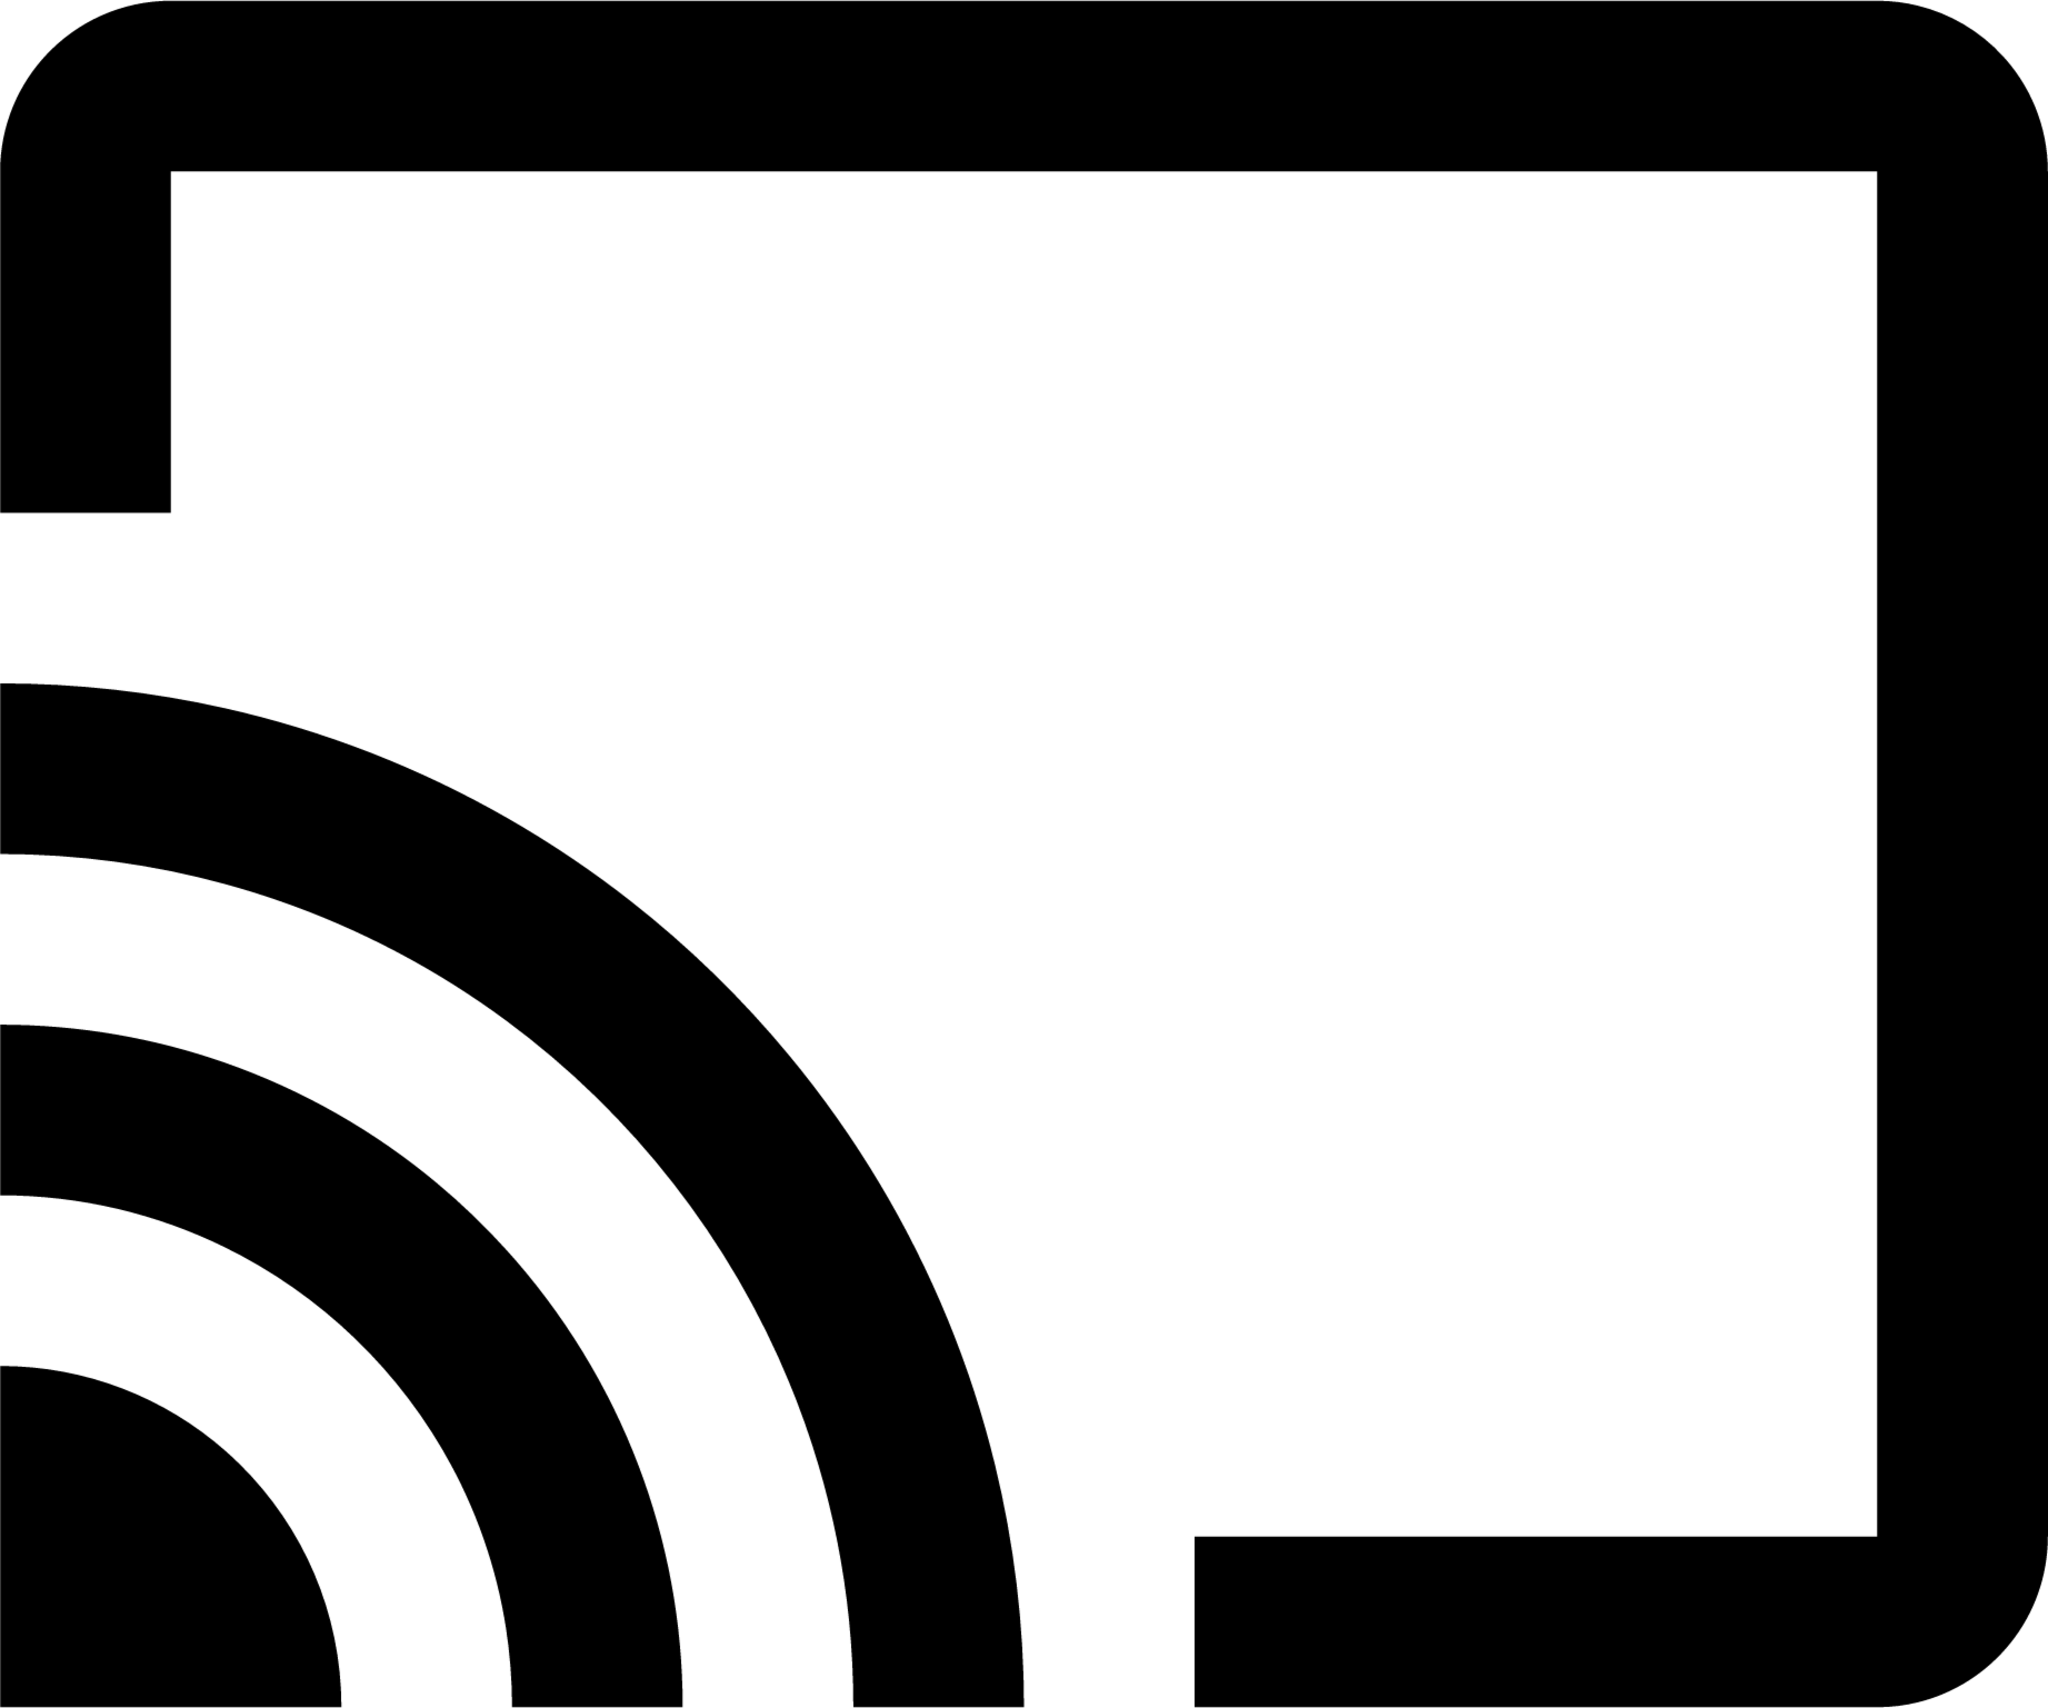 chromecast icon vector